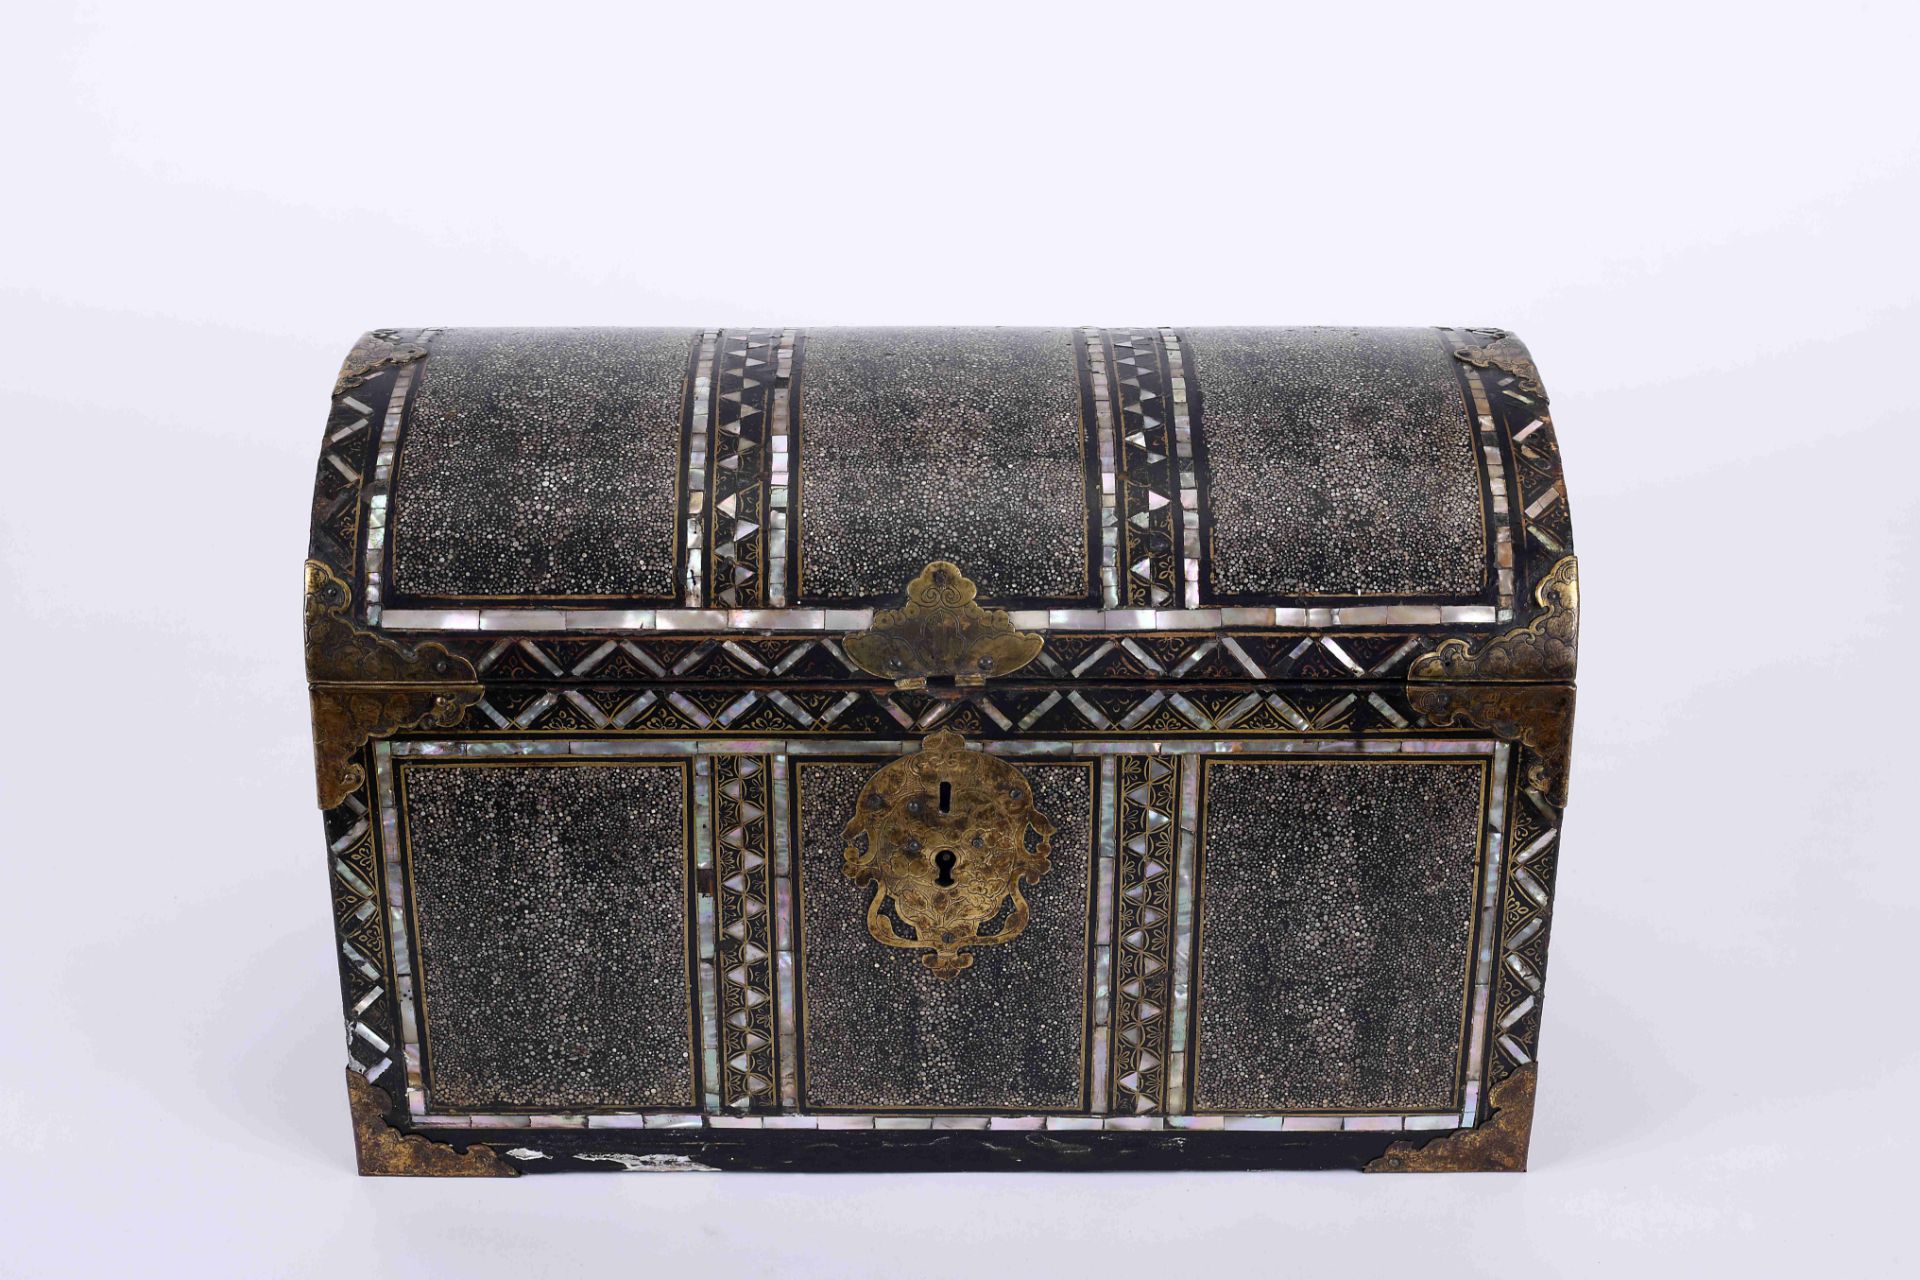 A large chest-shaped casket